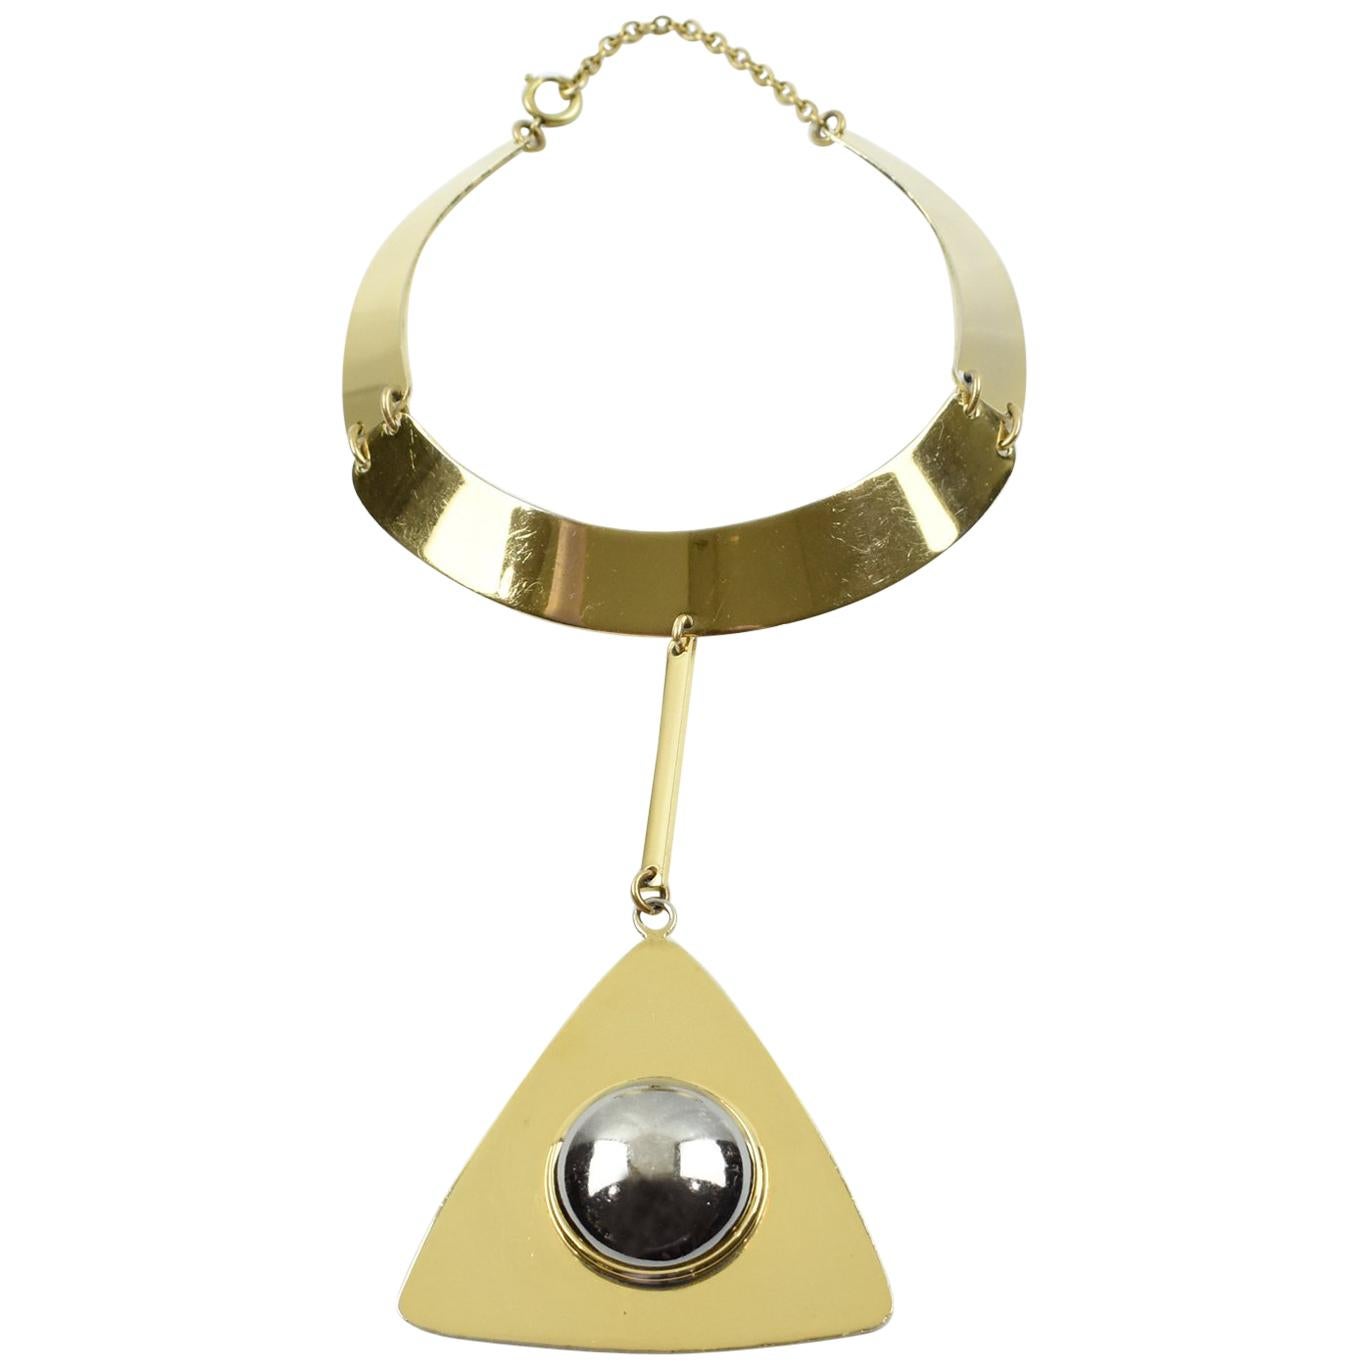 Pierre Cardin Paris Modernist Space Age Gilt Metal Rigid Collar Necklace 